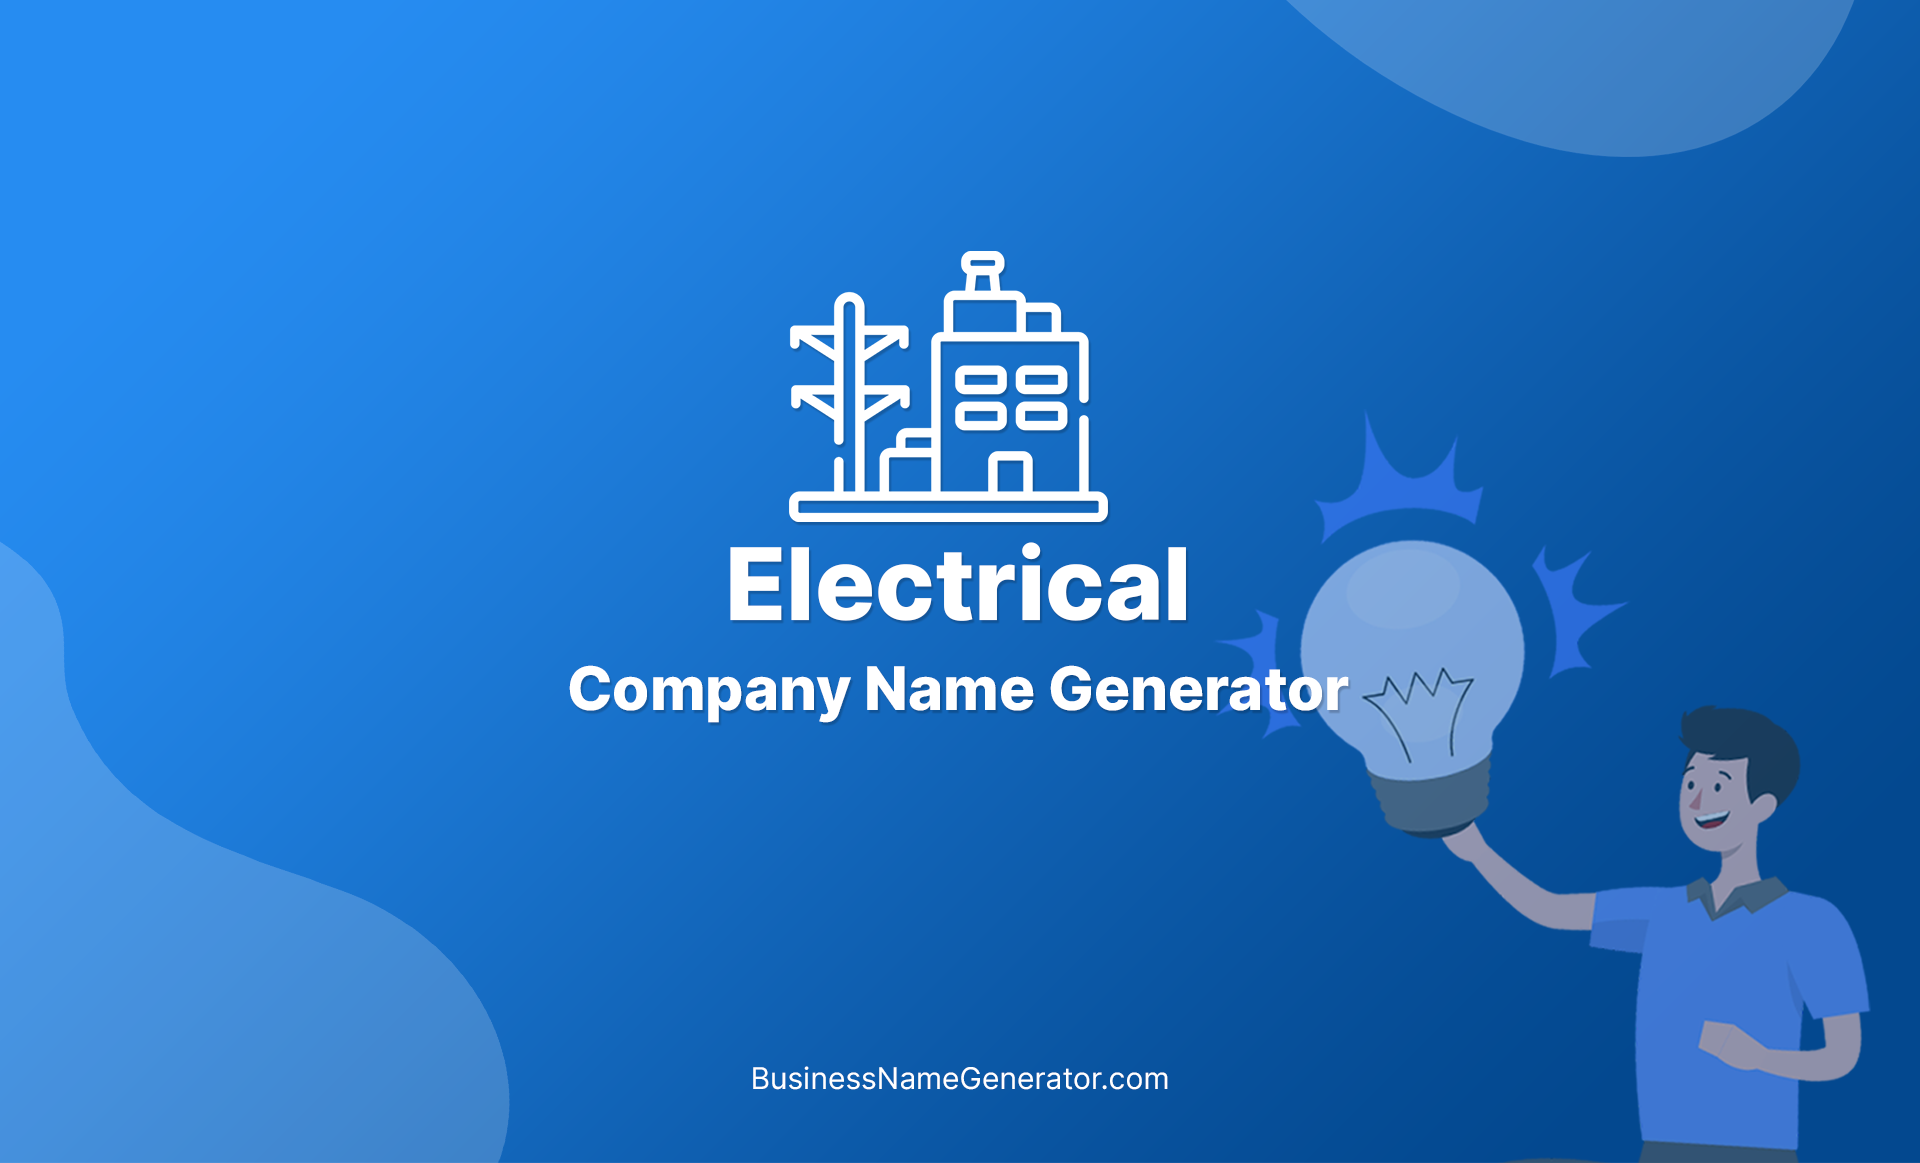 Electrical Company Name Generator